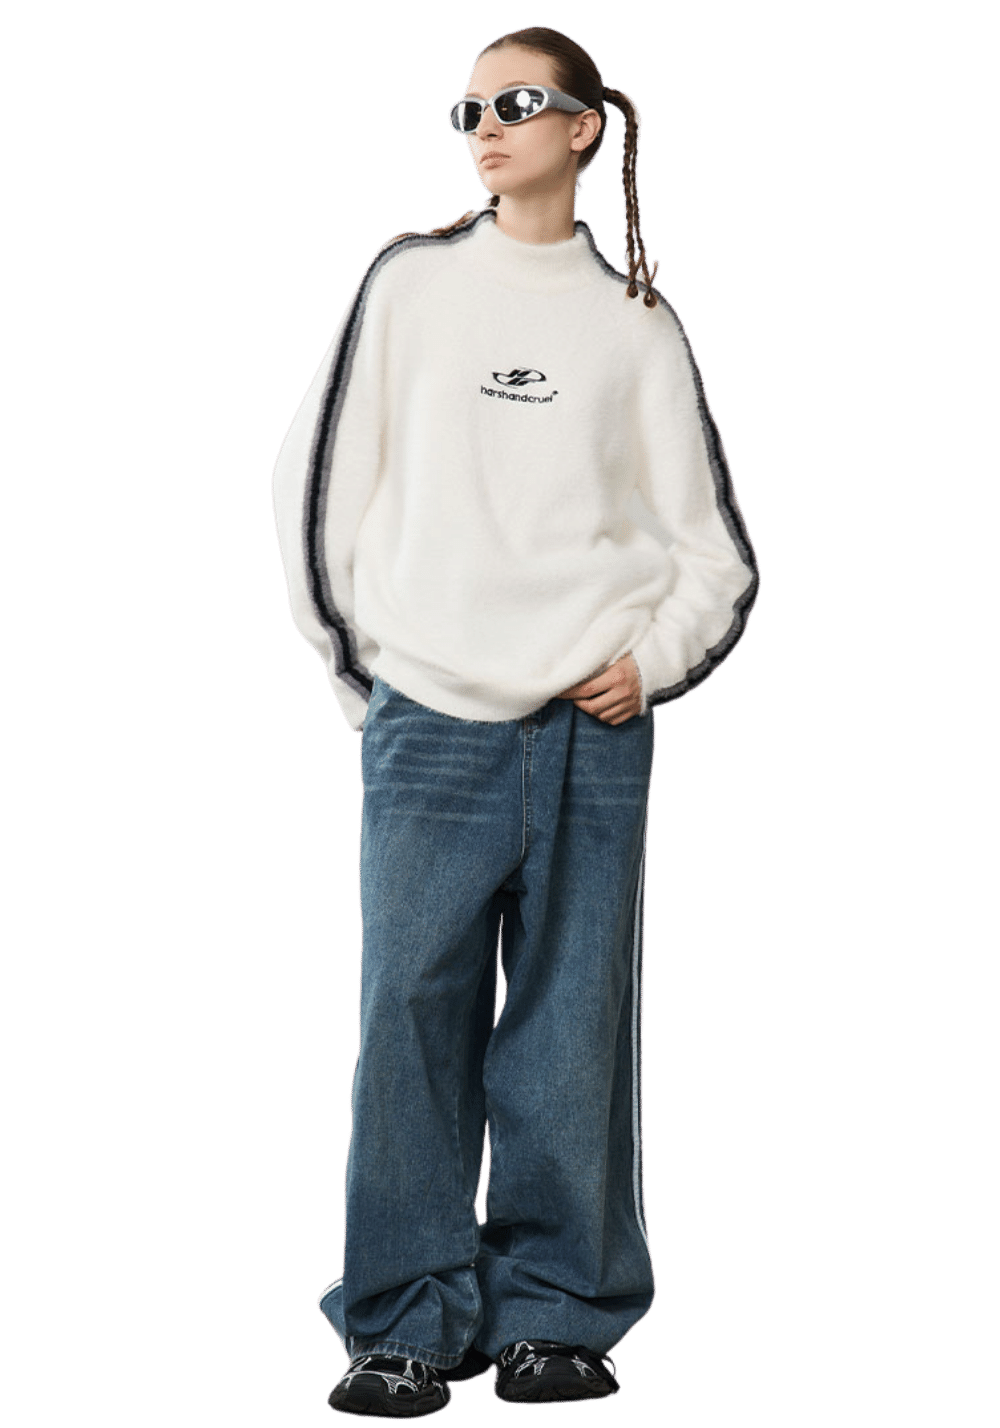 High Neck Contrast Color Sweater - PSYLOS 1, High Neck Contrast Color Sweater, Sweater, HARSH AND CRUEL, PSYLOS 1